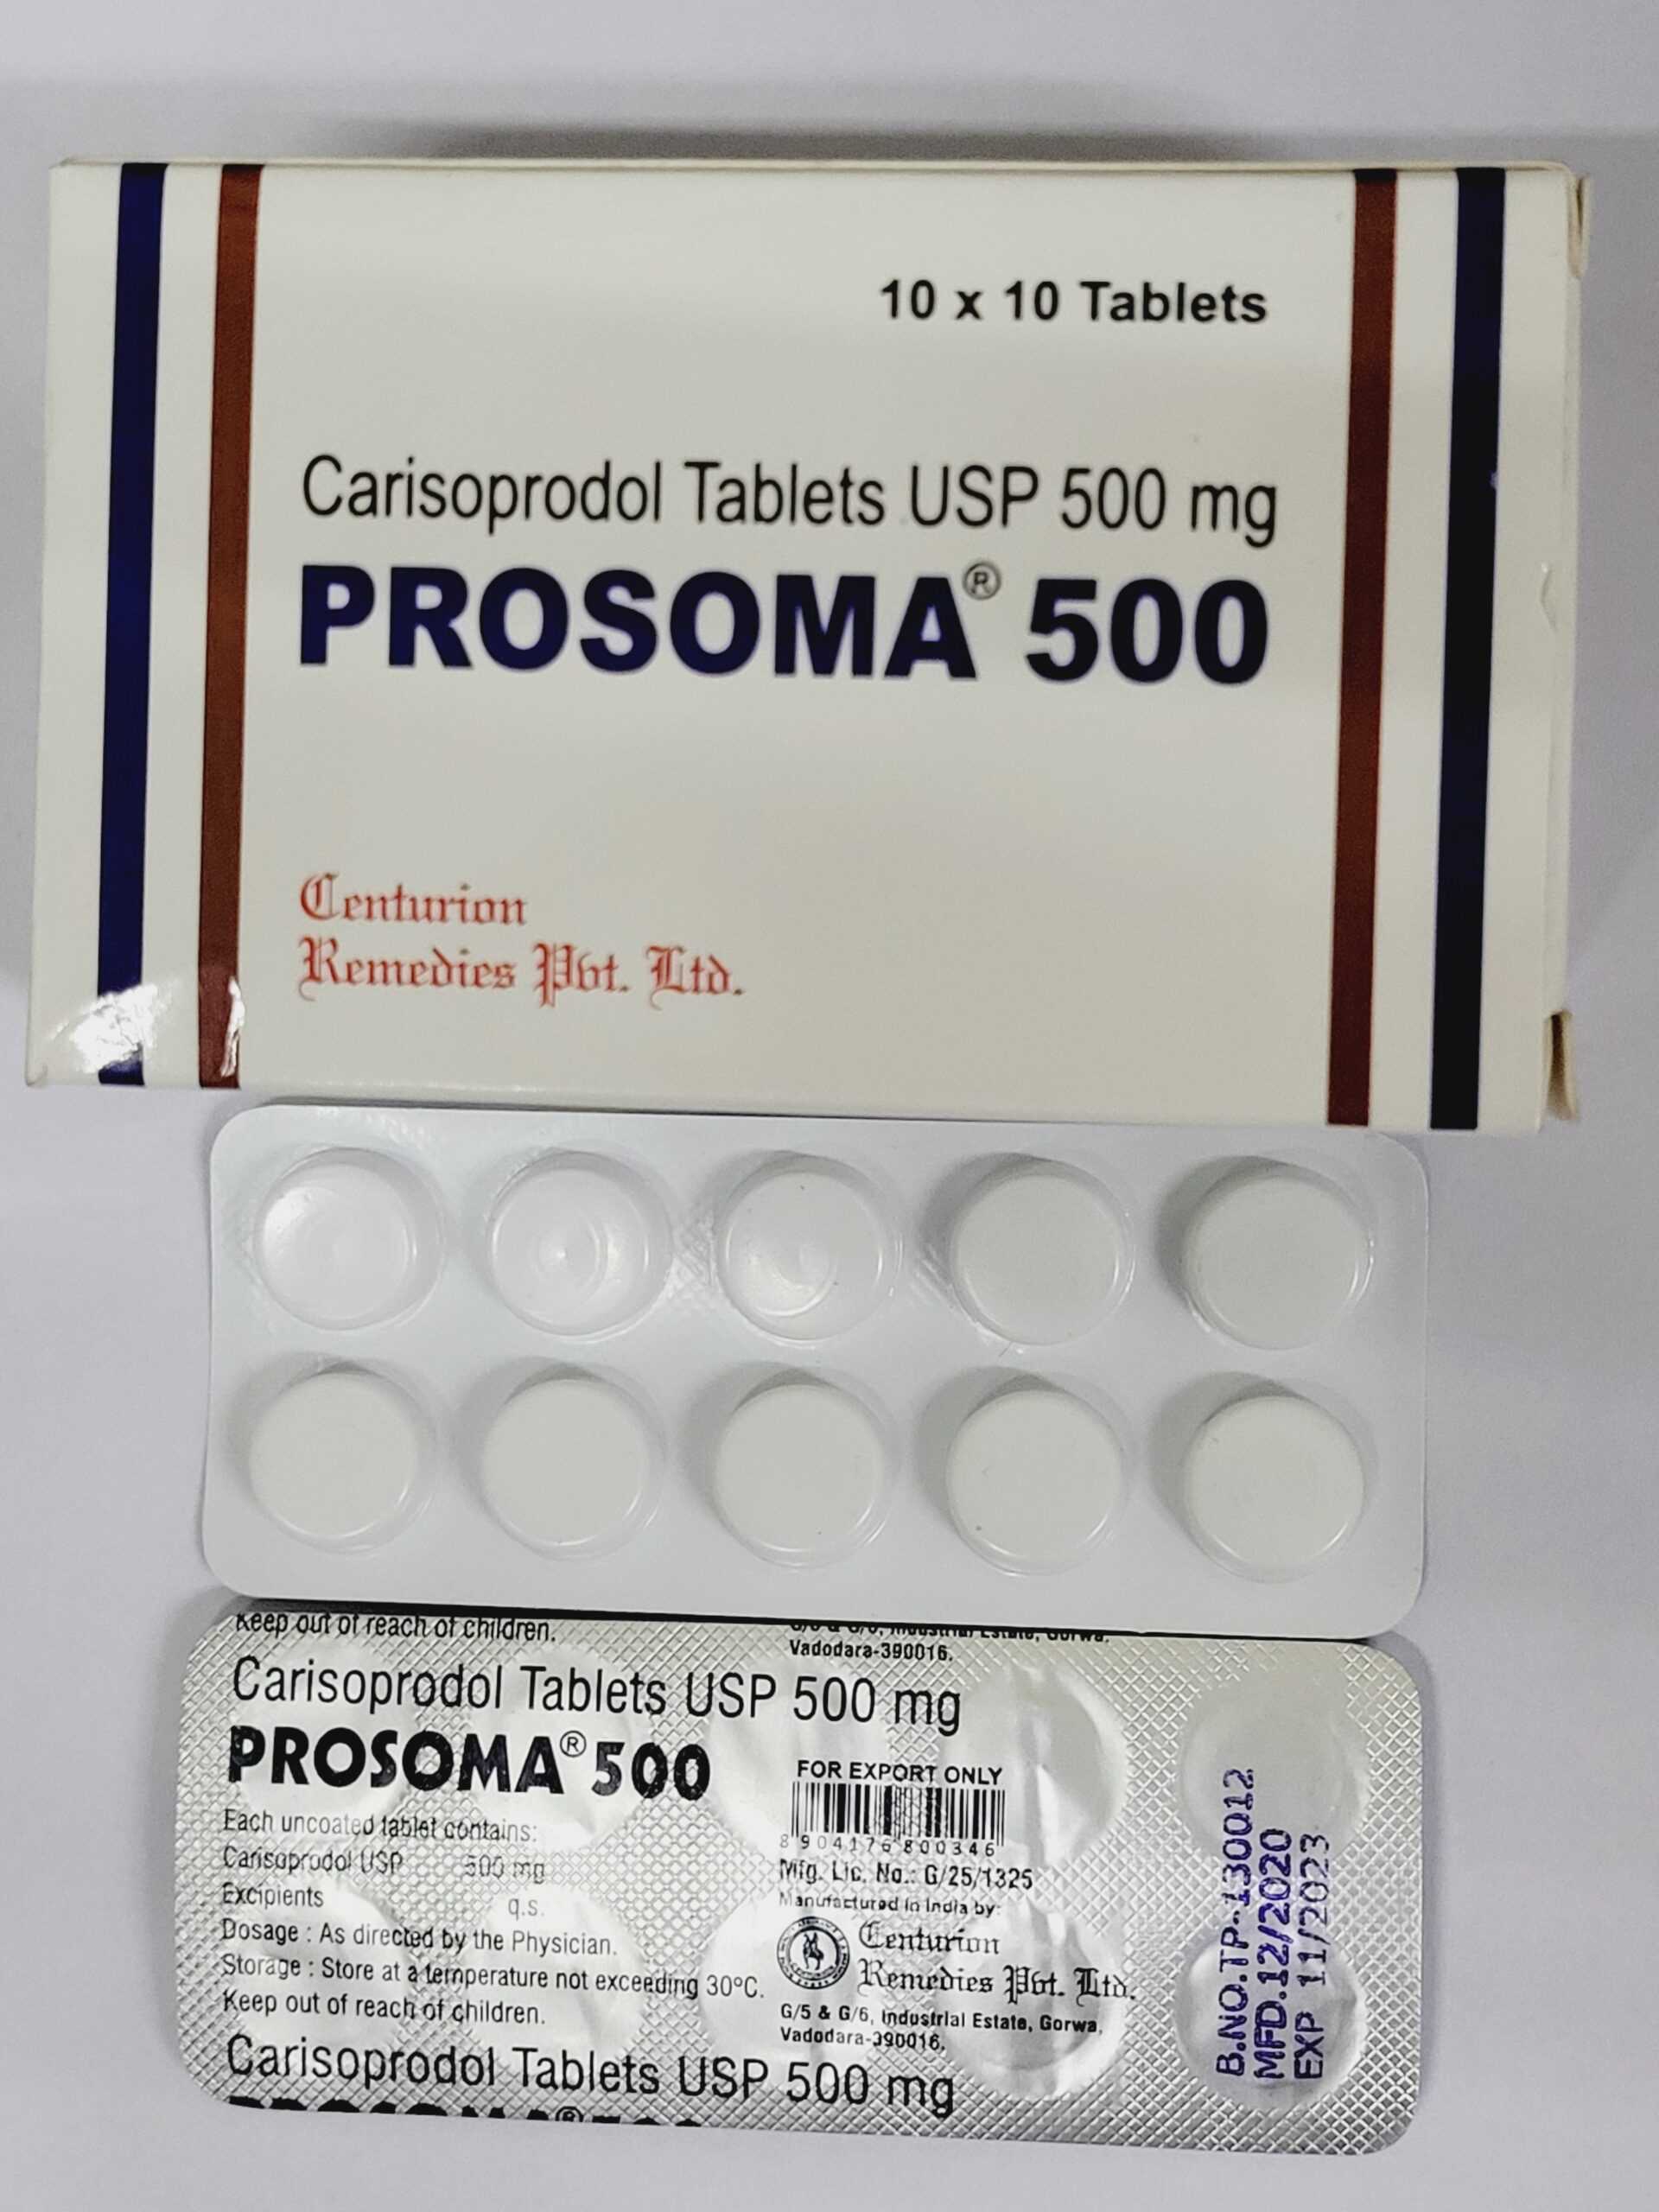 Buy Soma Online (Carisoprodal) Without Prescription